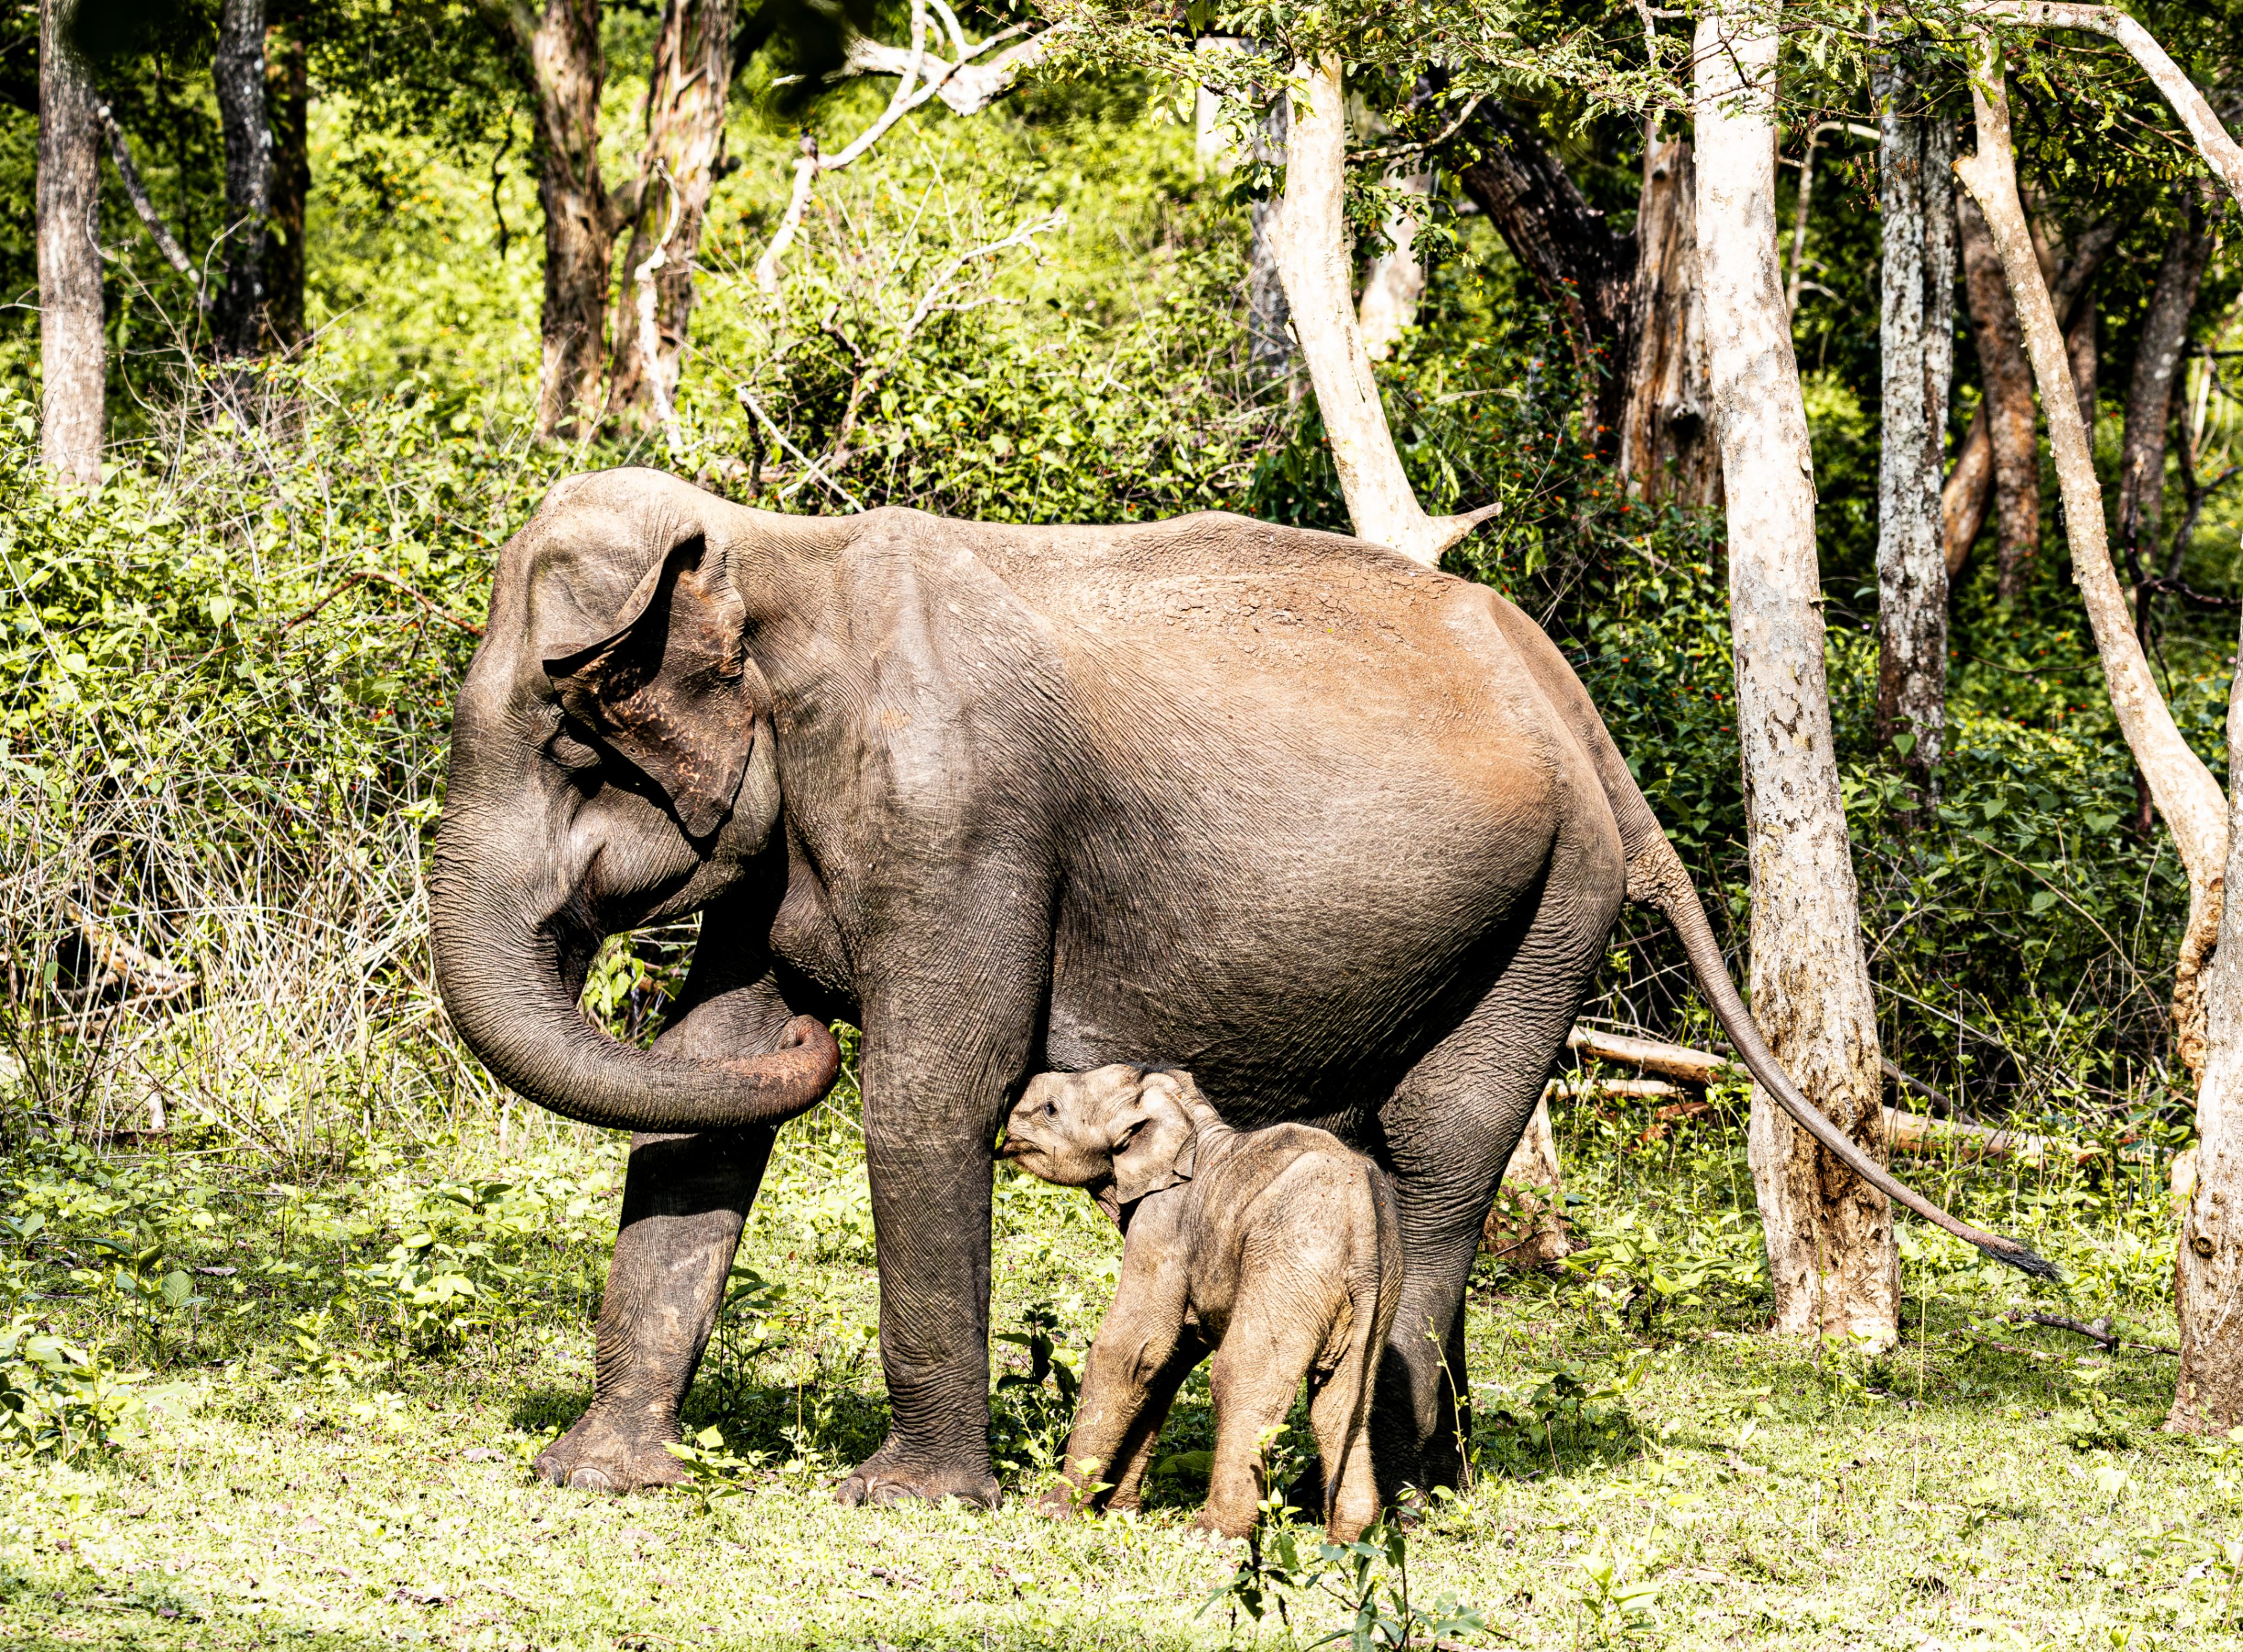 Mother elephant suckling her baby